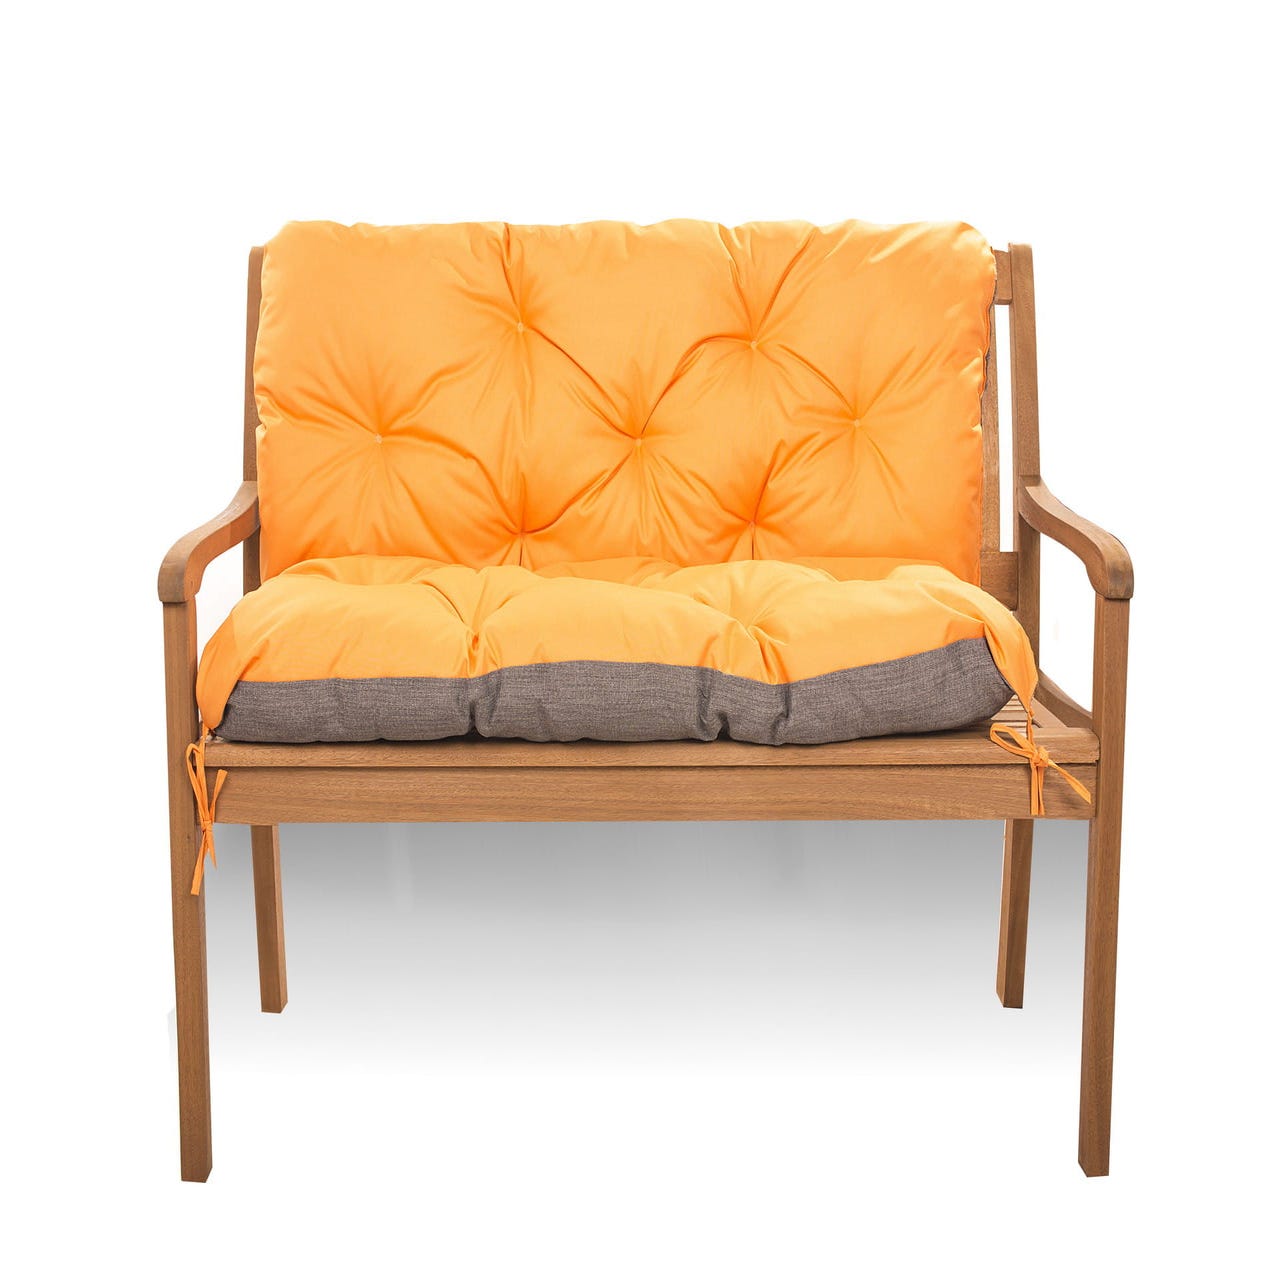 Cuscino per panca da giardino 100 x 50 x 40 cm Cuscino per altalena,  arancione